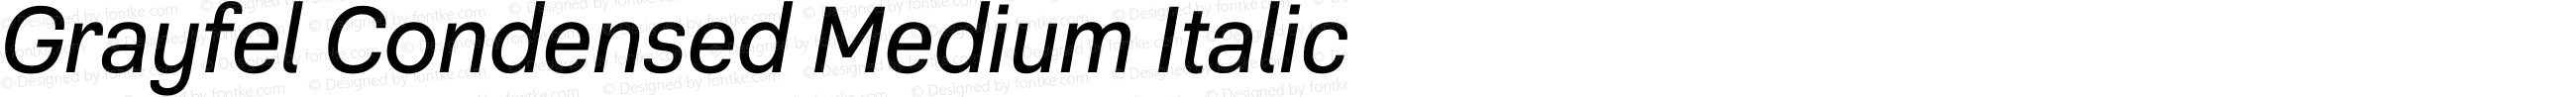 Grayfel Condensed Medium Italic